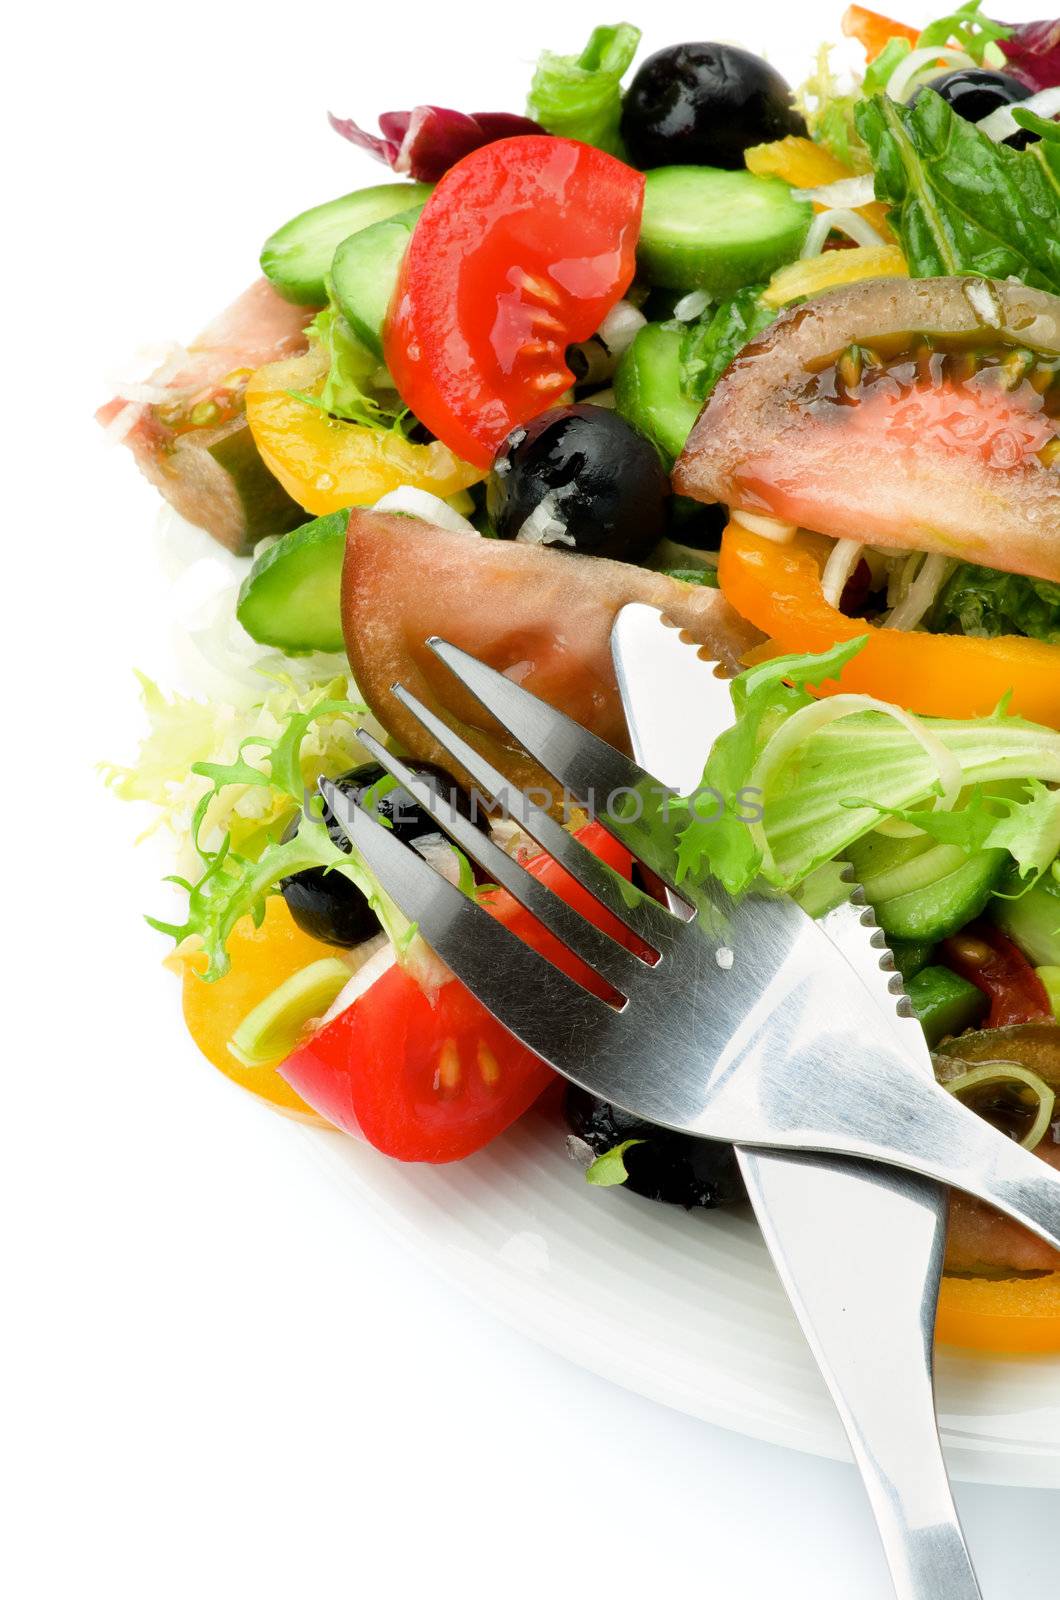 Vegetable Salad by zhekos